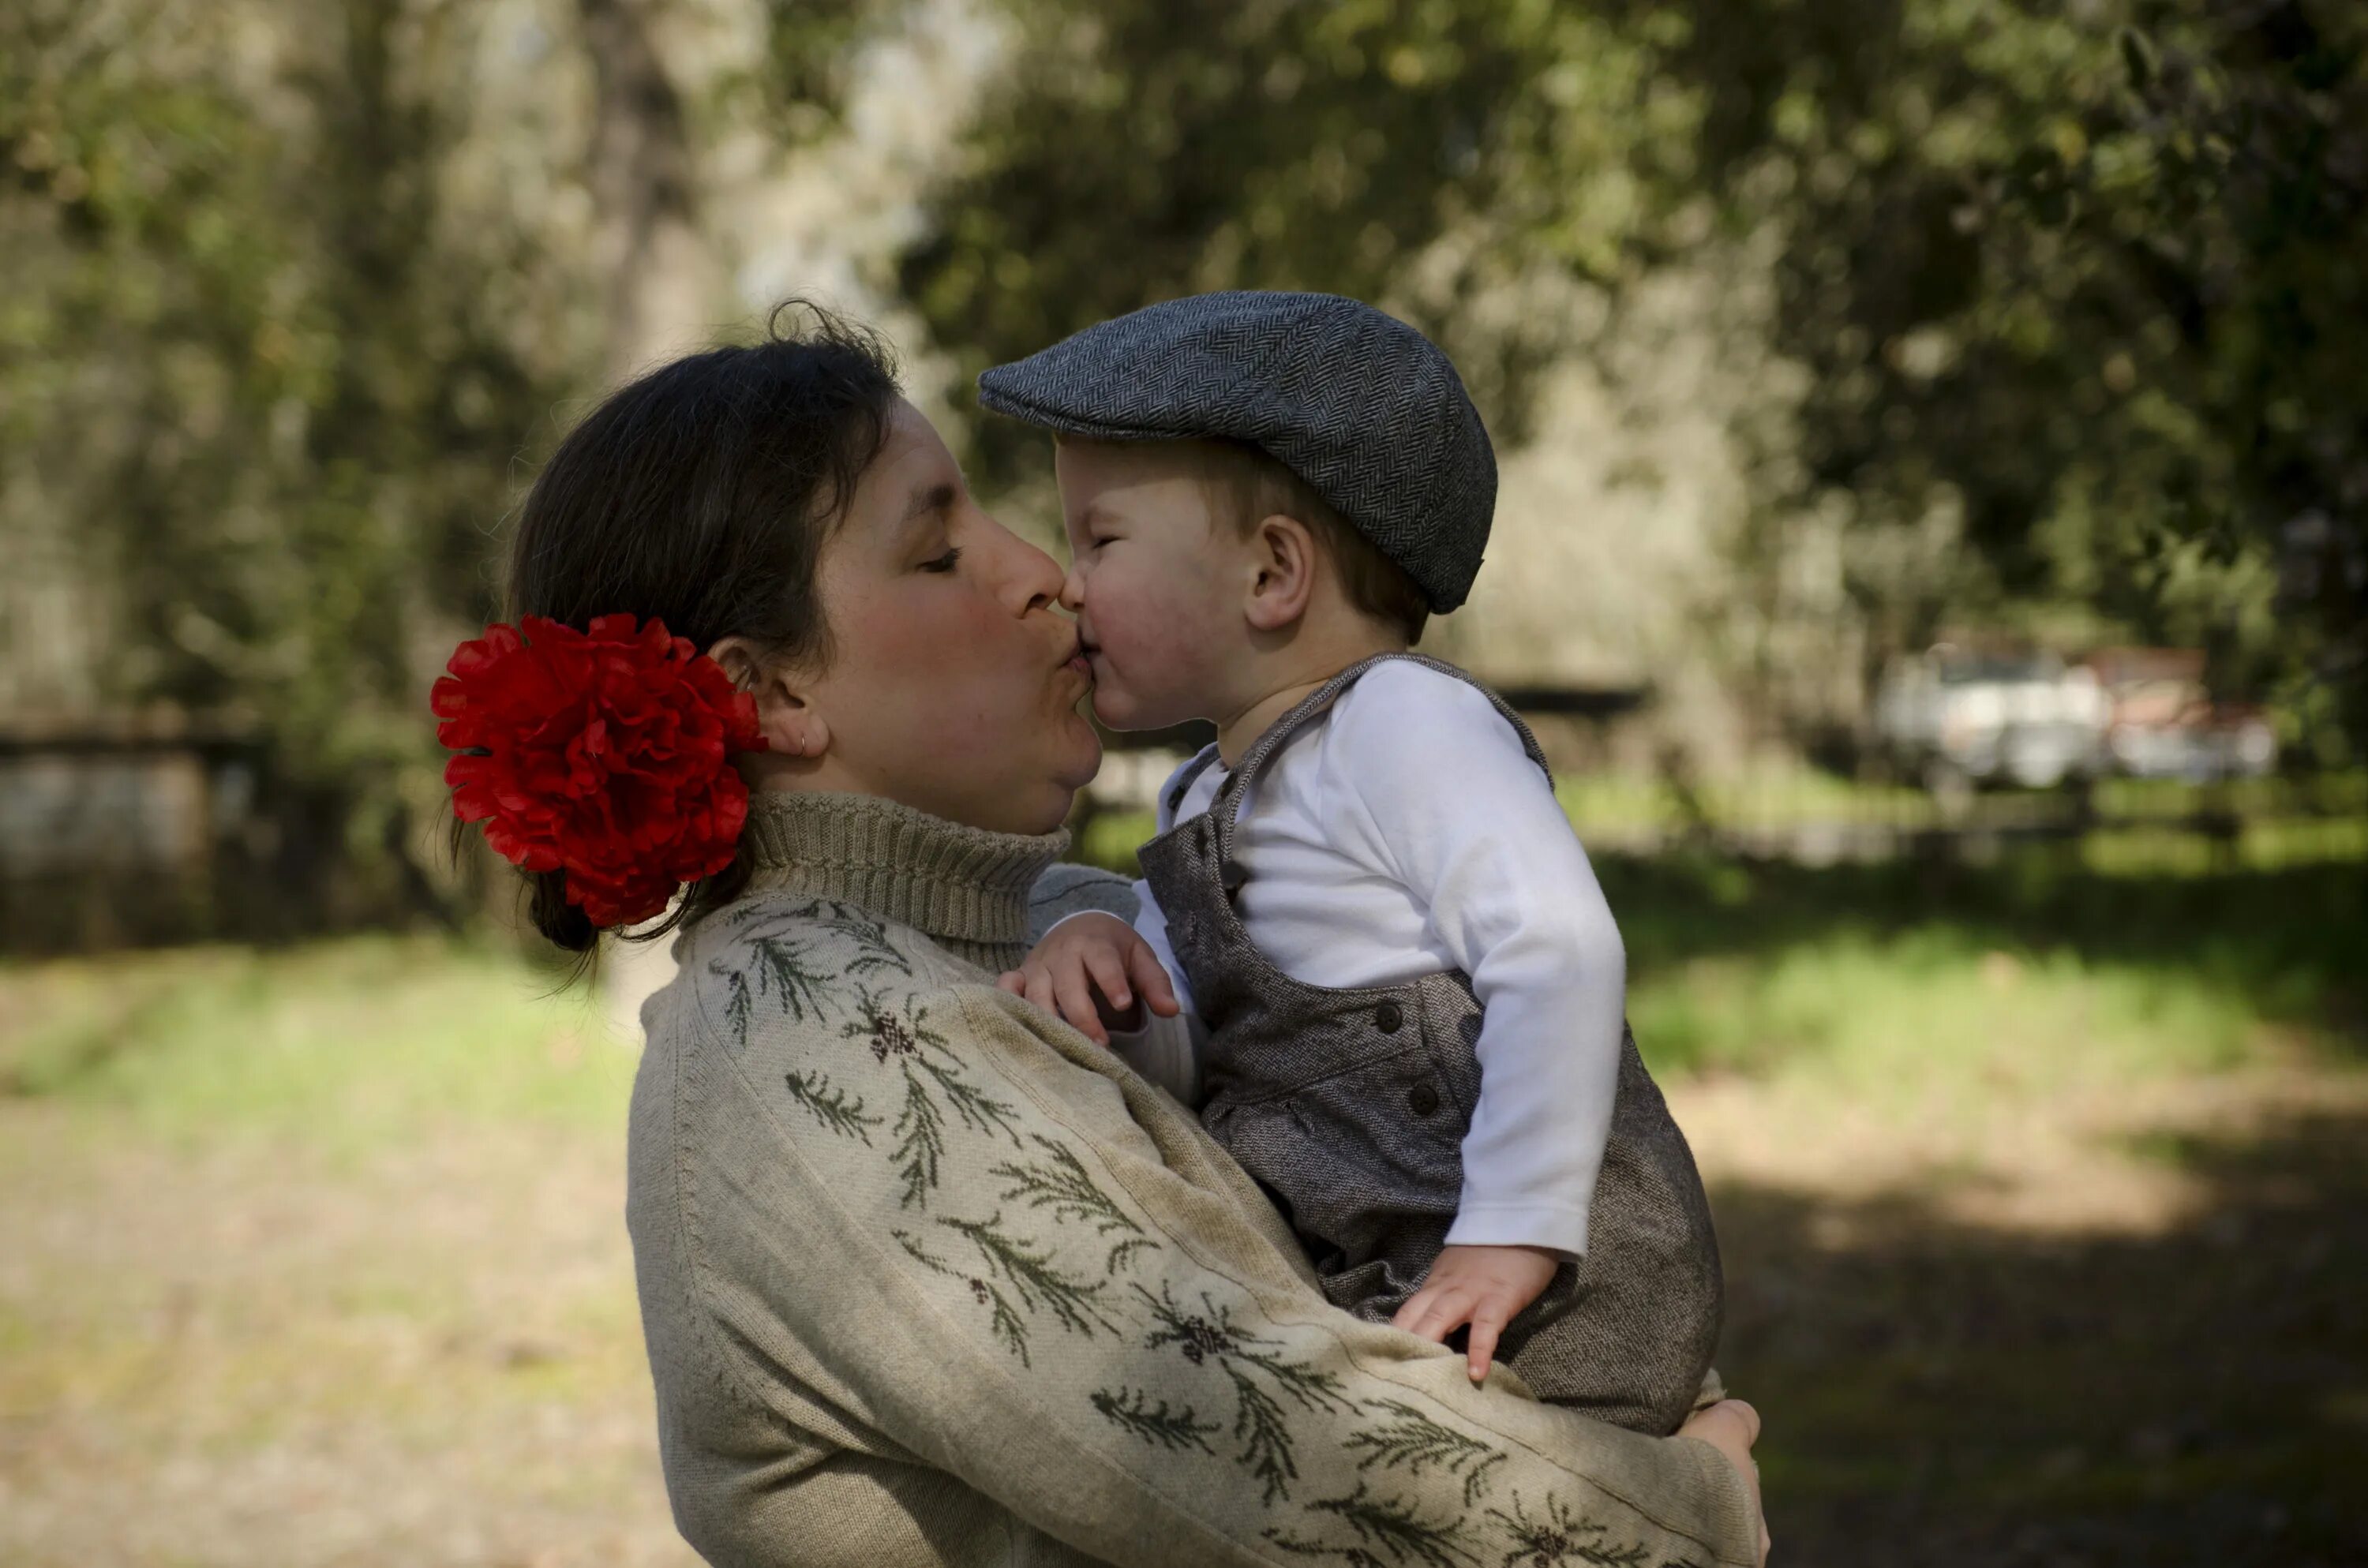 Мом son Kiss. Поцелуй сына. Детский поцелуй. Поцелуй матери и сына.